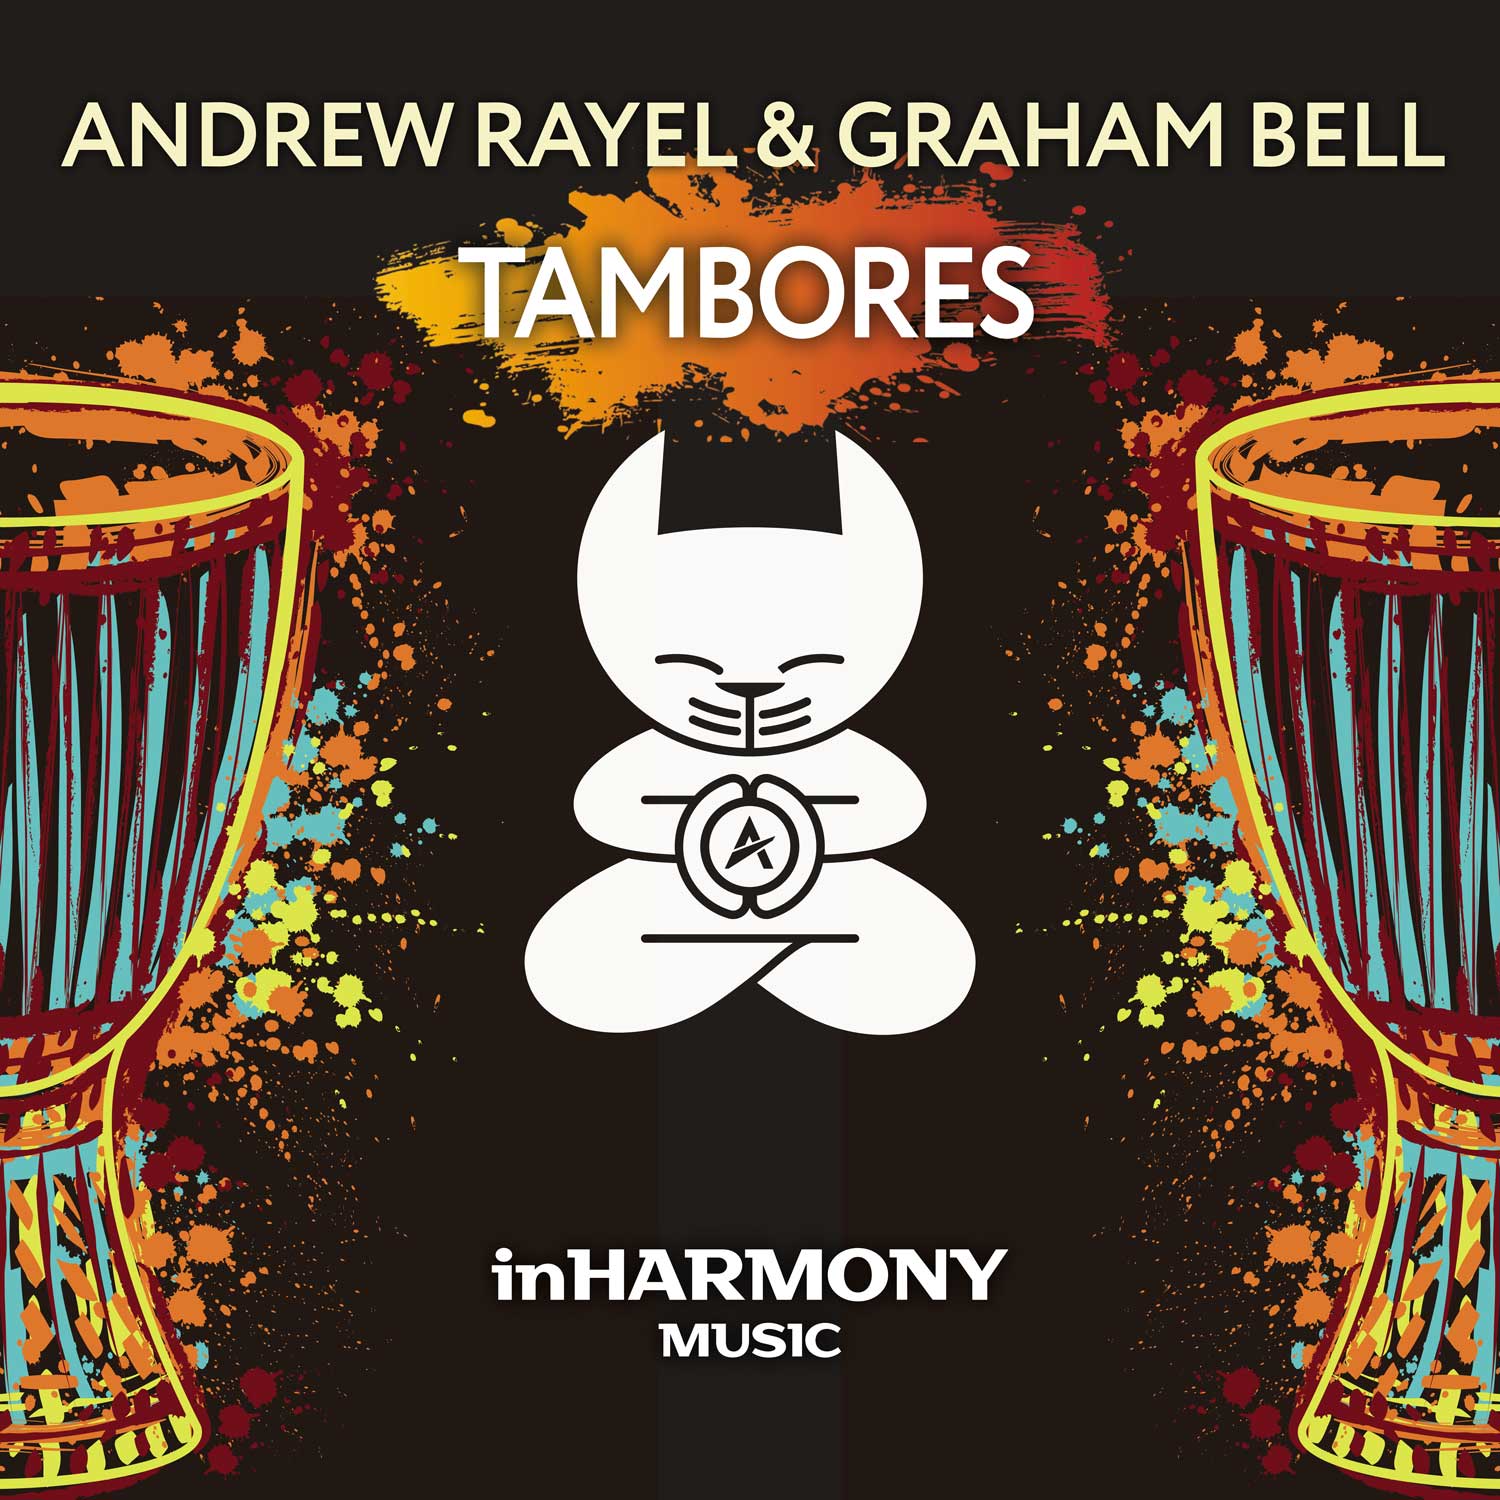 Andrew Rayel & Graham Bell, "Tambores" - artwork